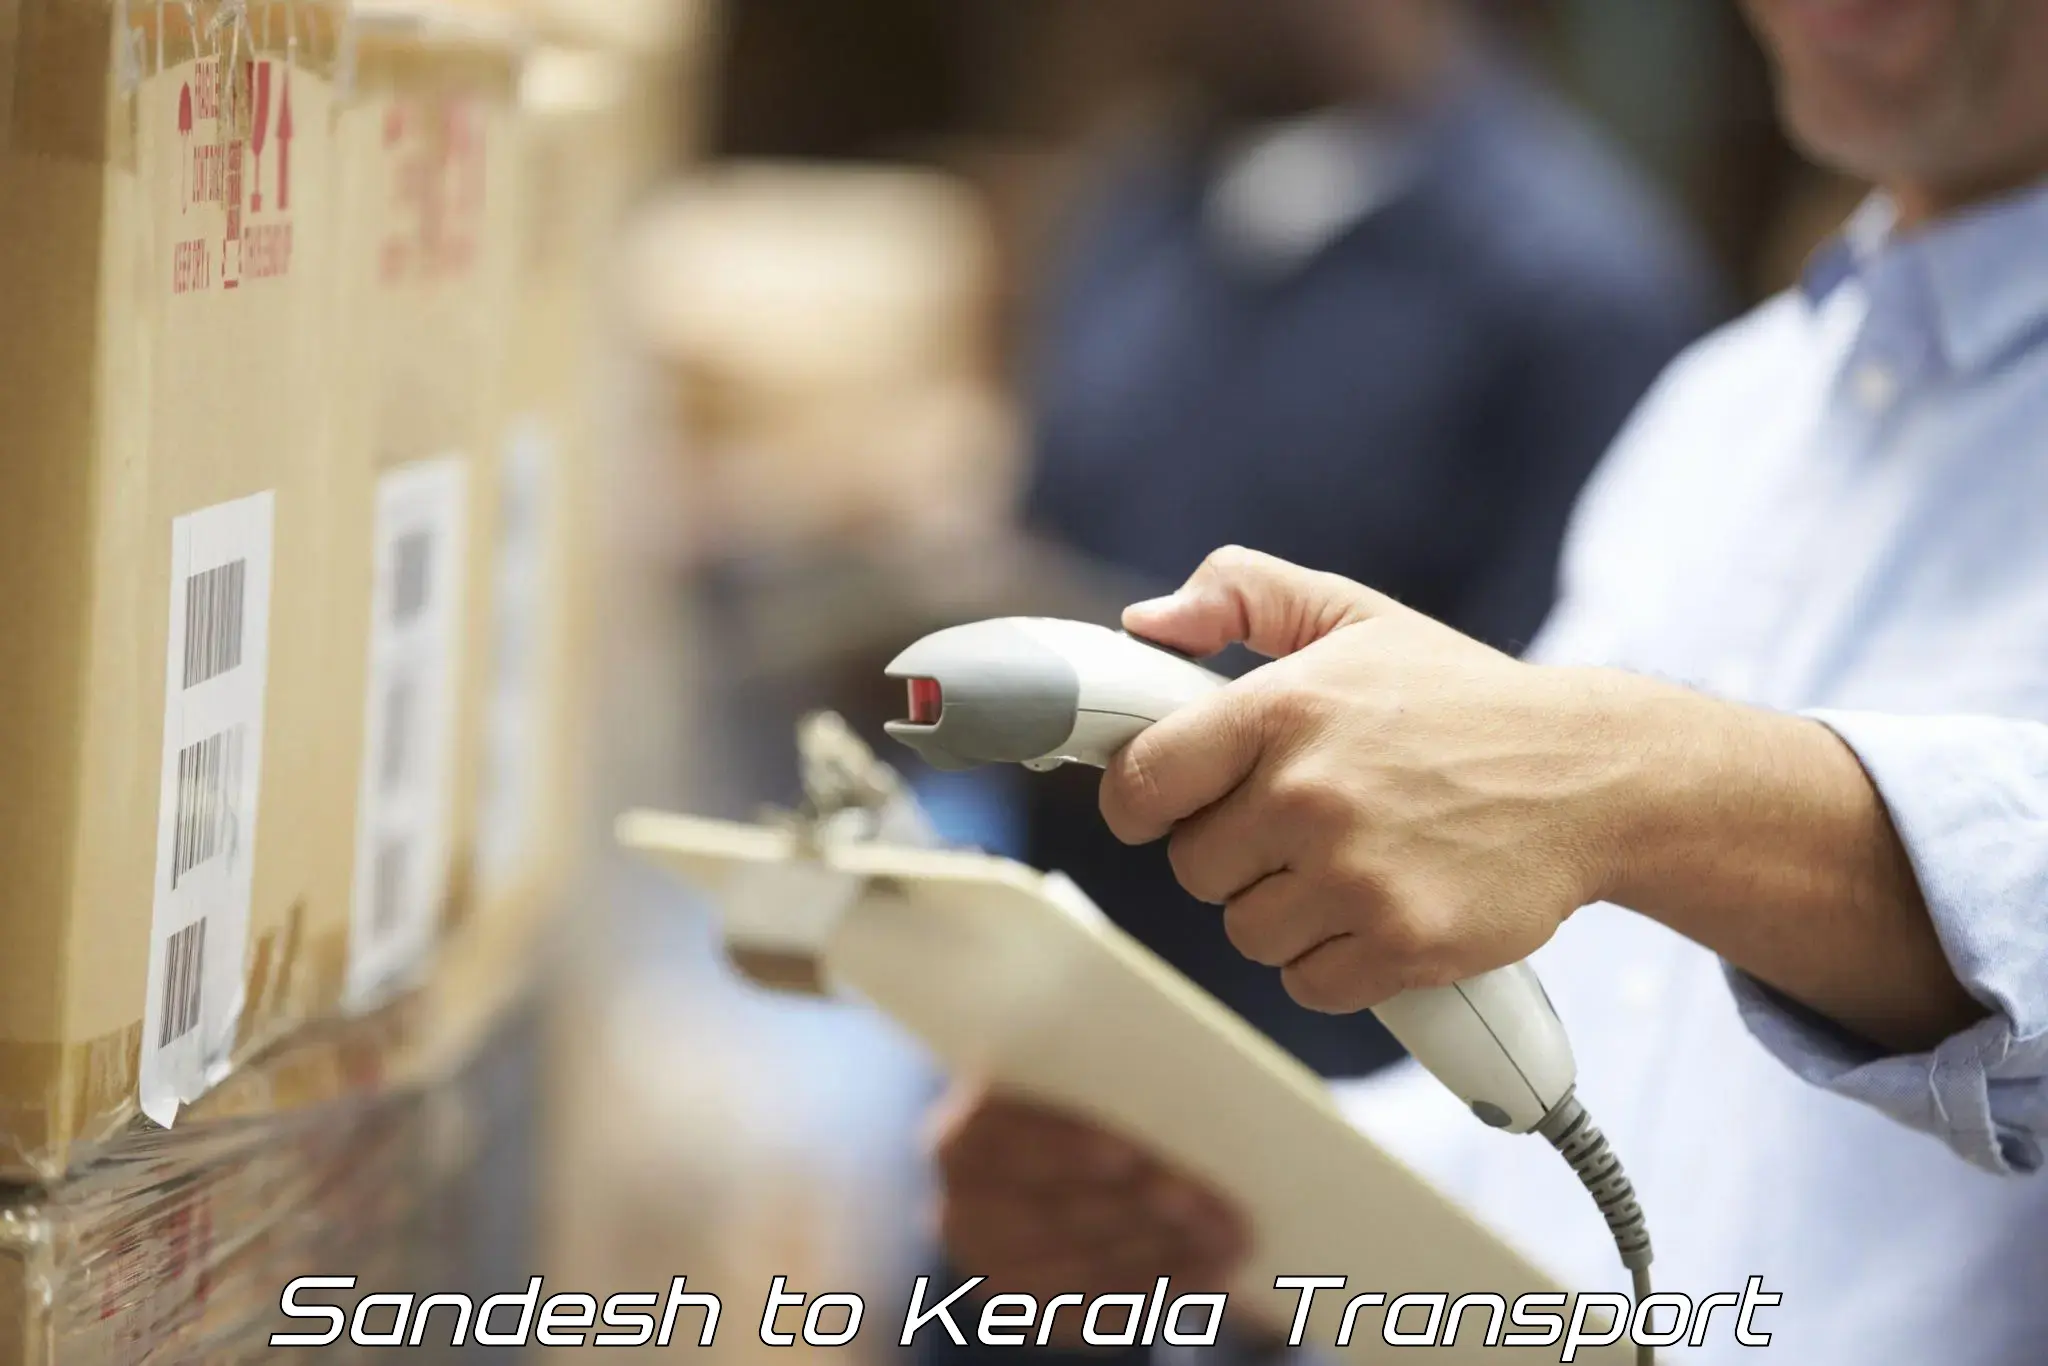 Goods delivery service Sandesh to Kozhikode